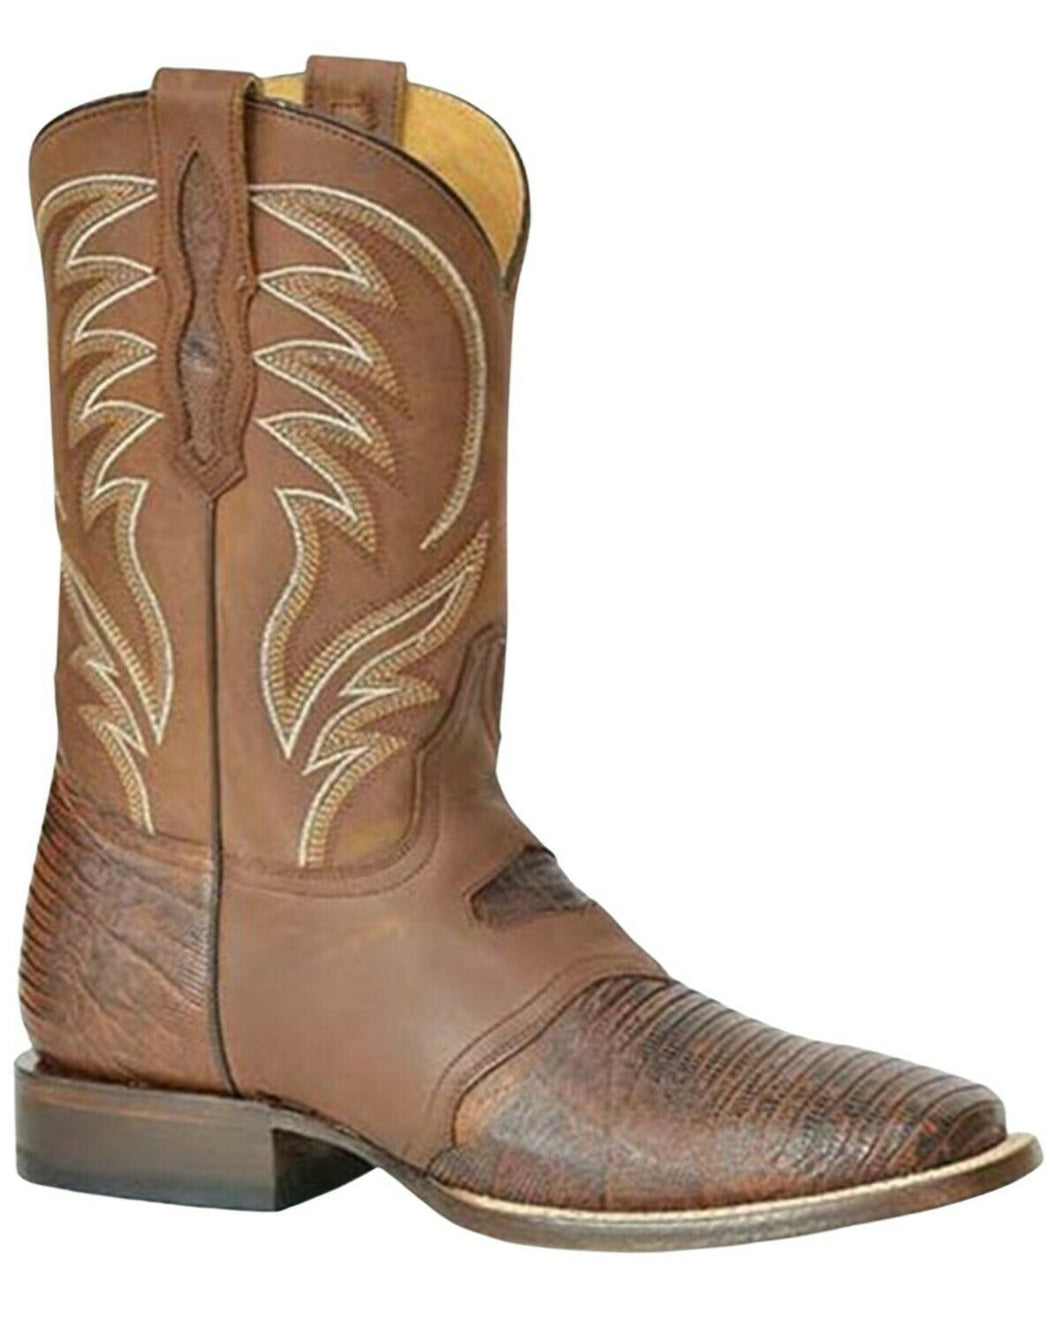 Pard's Western Shop Roper Footwear Brown Lizard Boots for Men